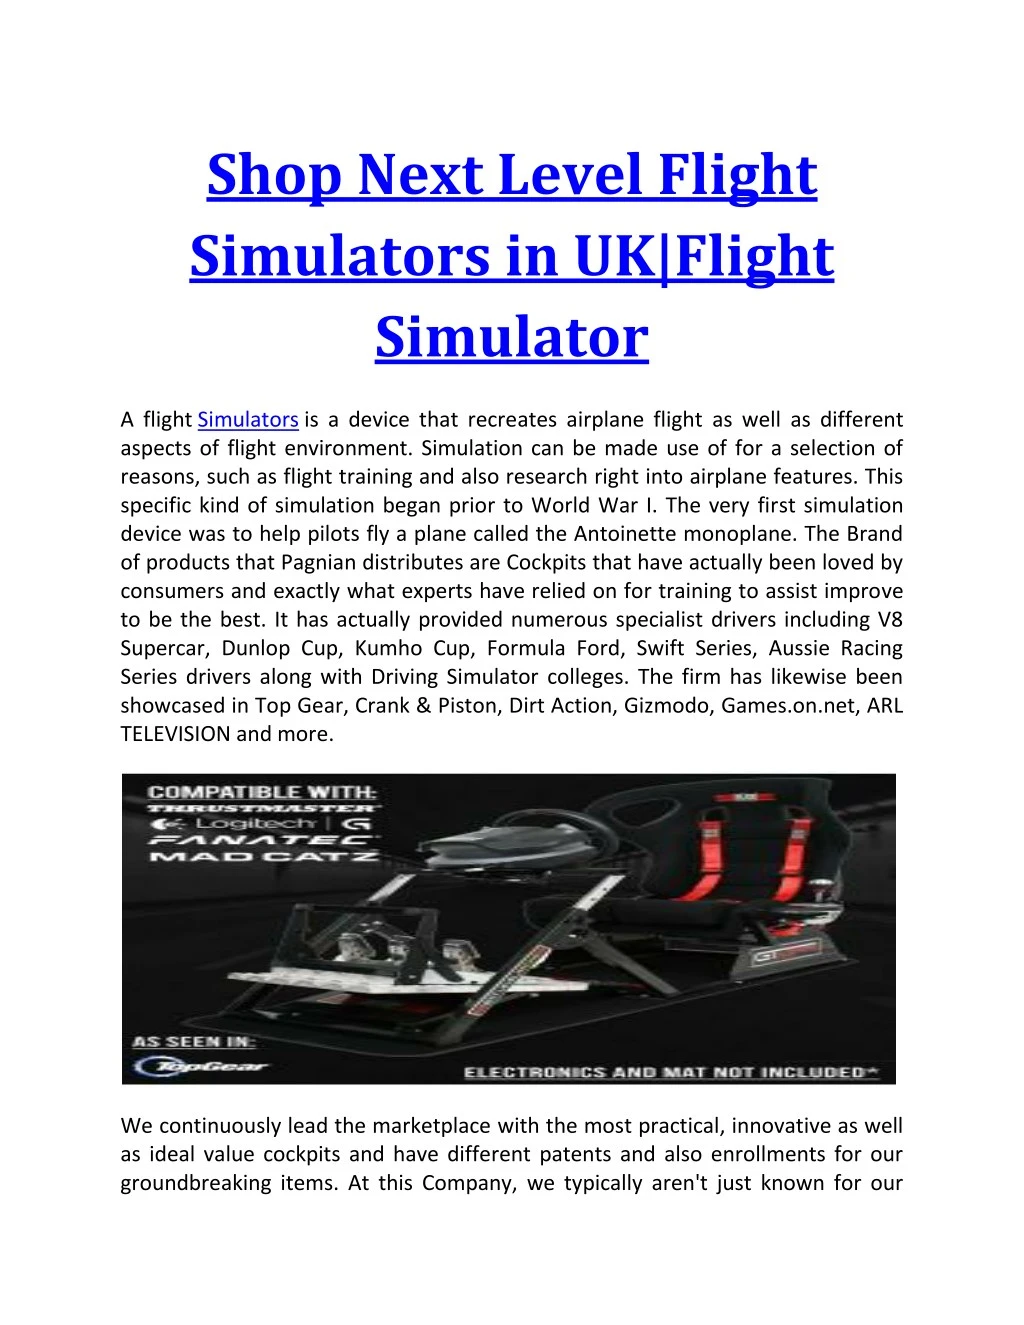 shop next level flight simulators in uk flight